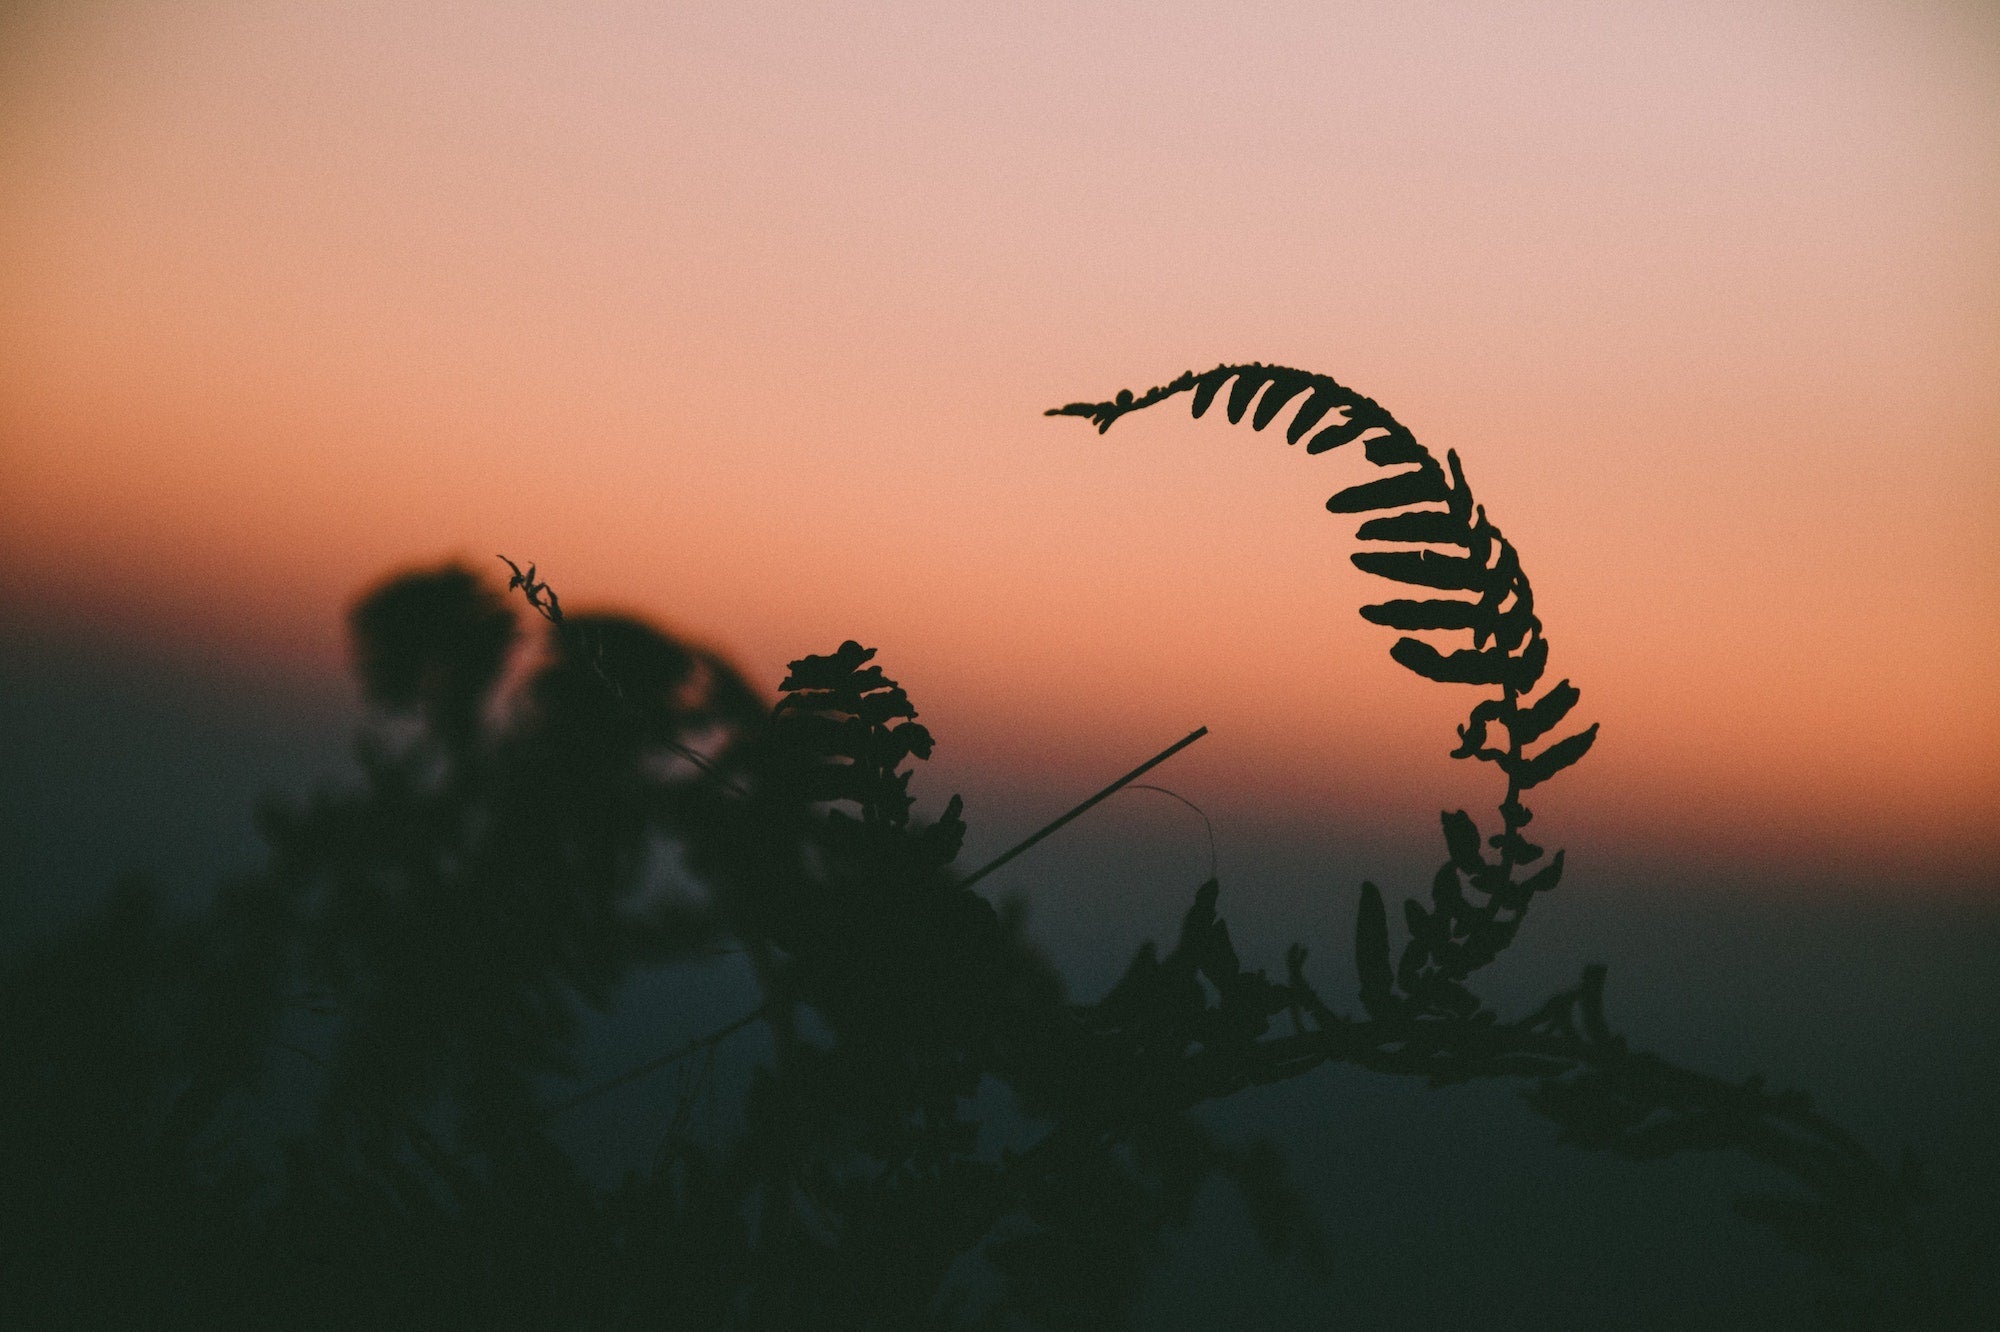 silhouette of a fern against a dusk sky